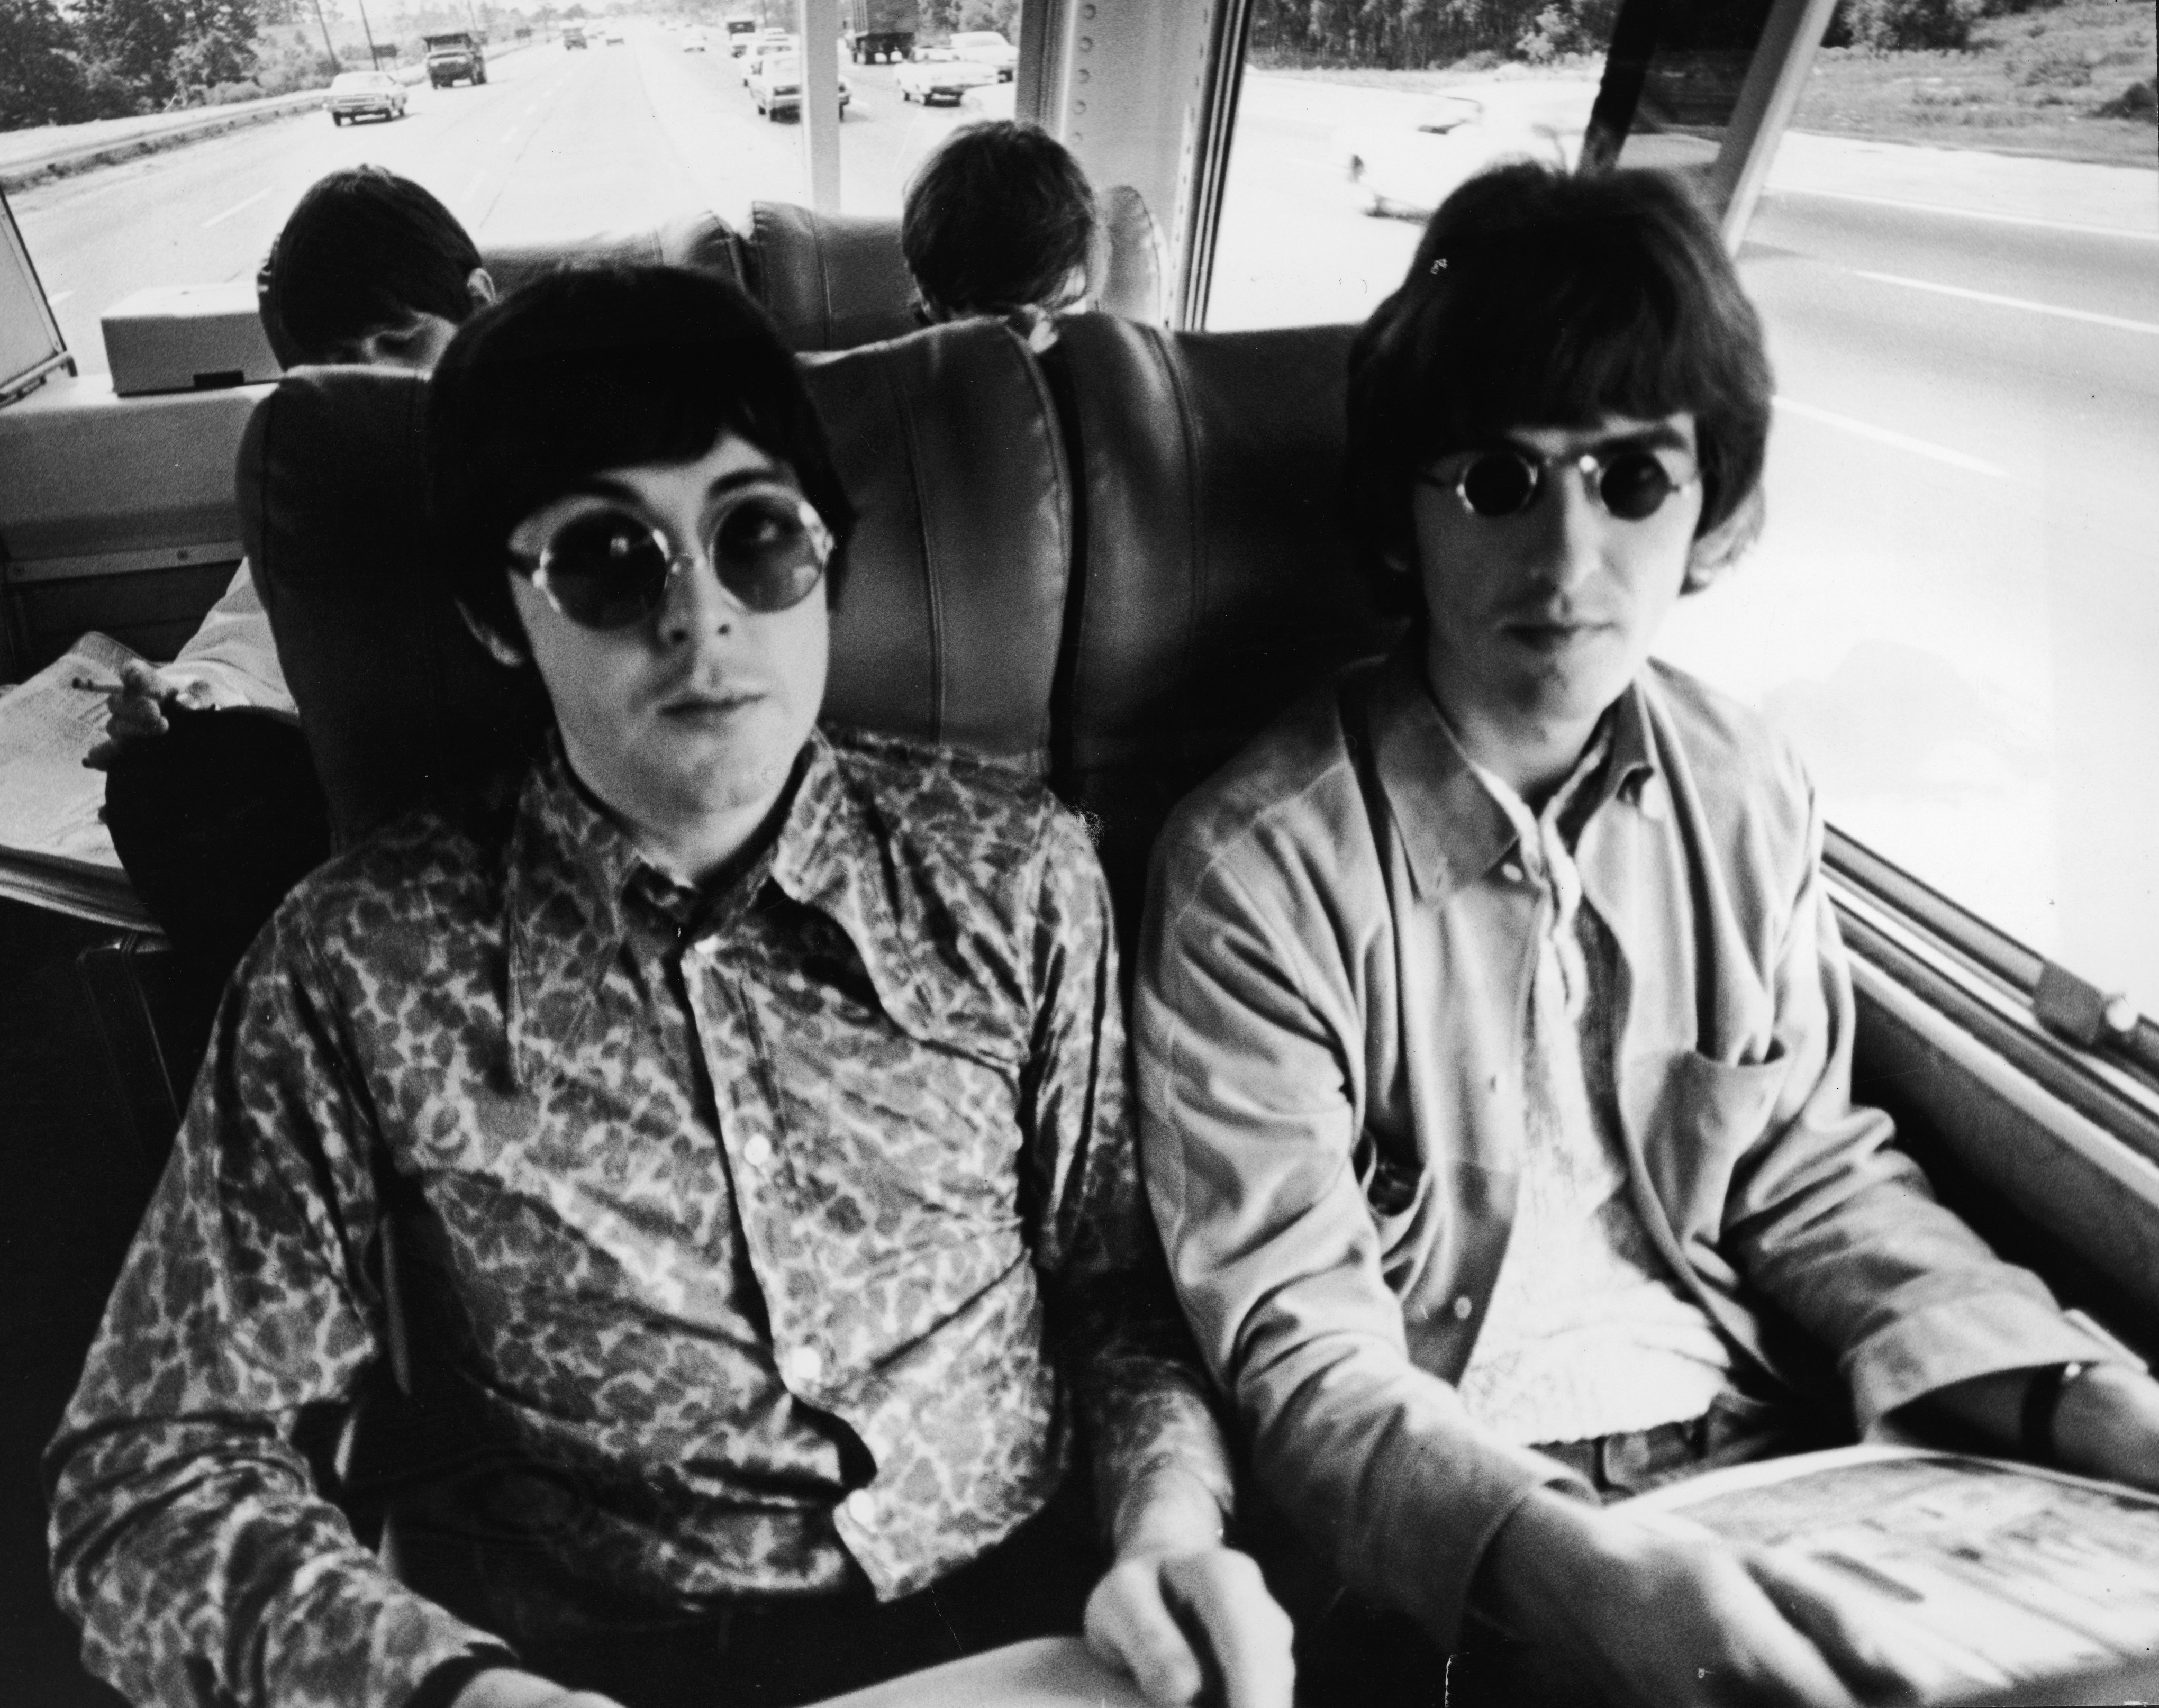 Paul McCartney and George Harrison wearing glasses